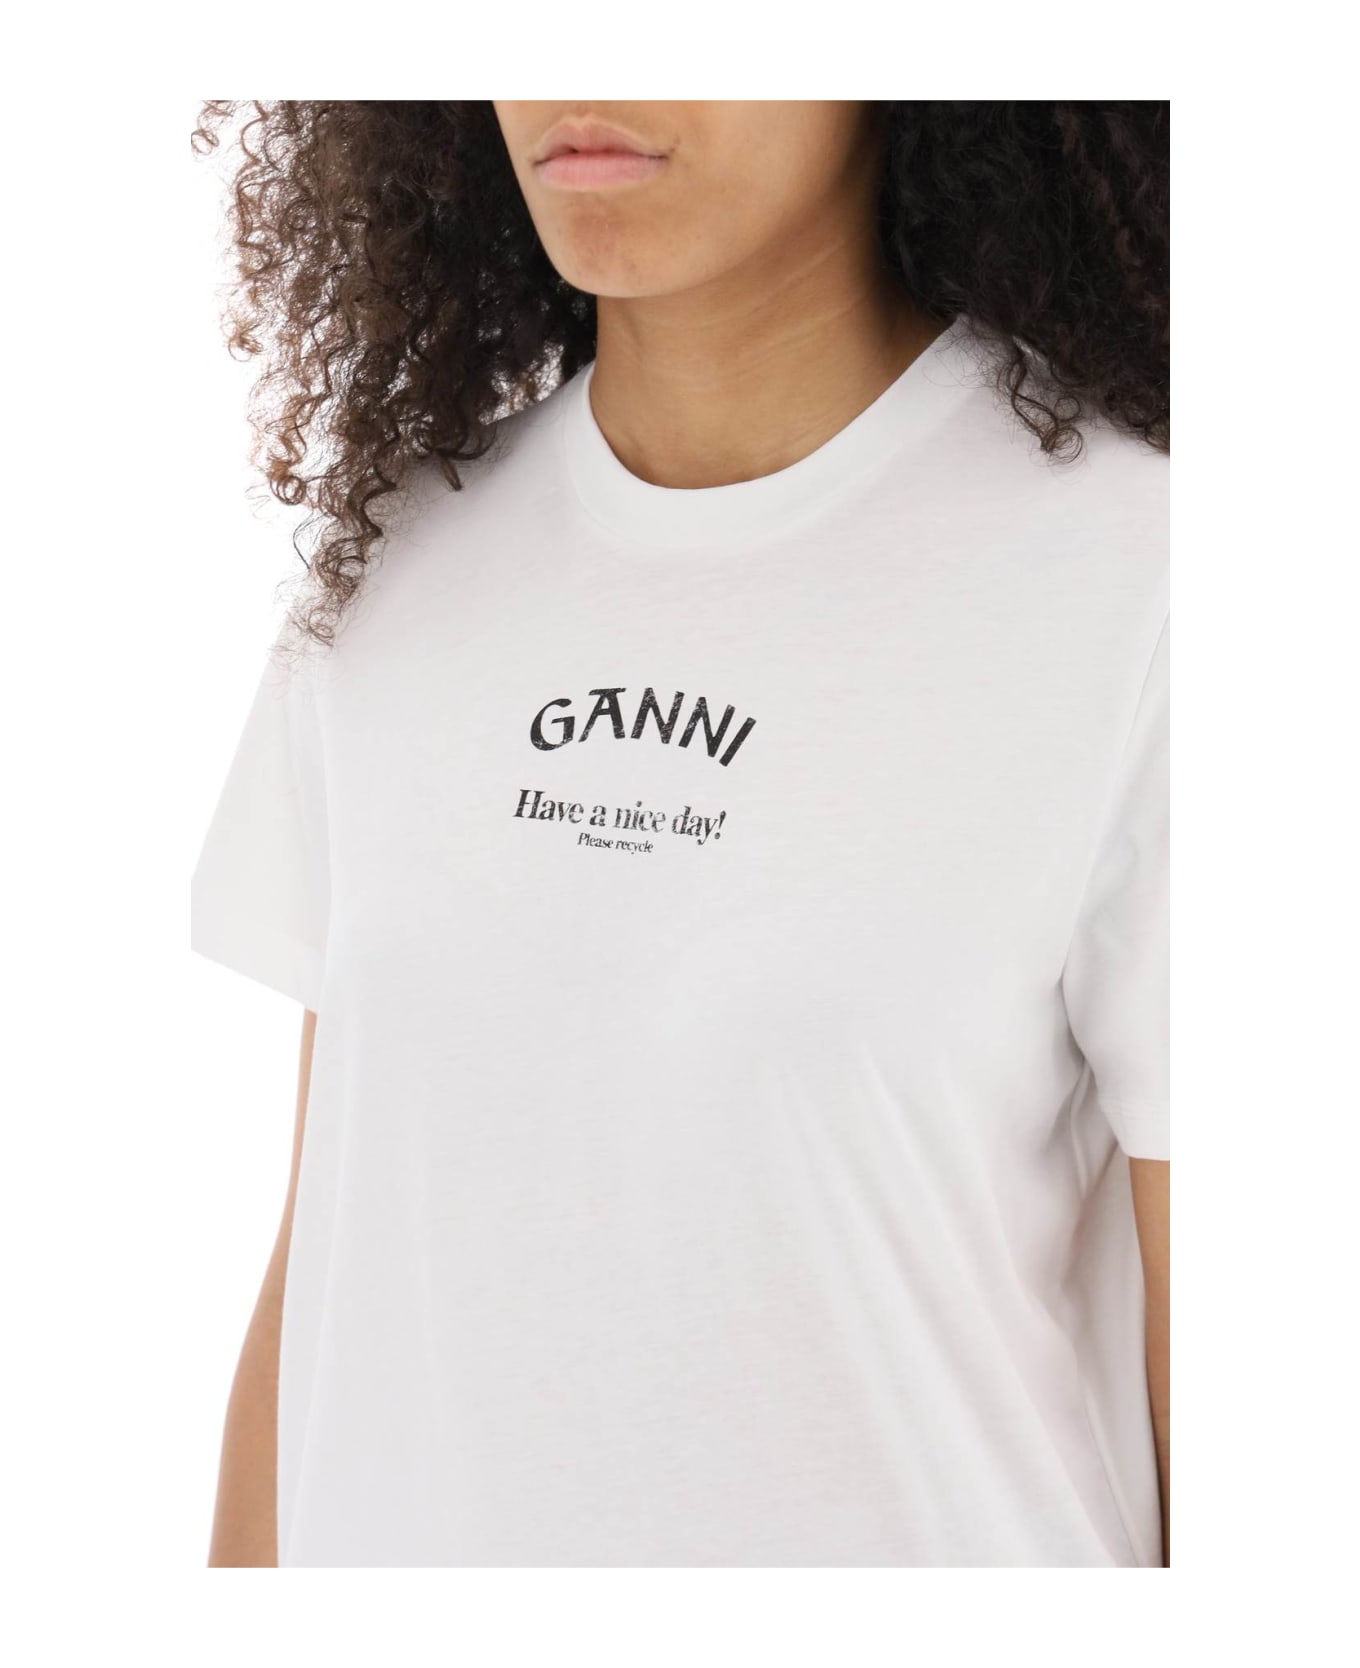 Ganni Lettering Print T-shirt - WHITE/BLACK